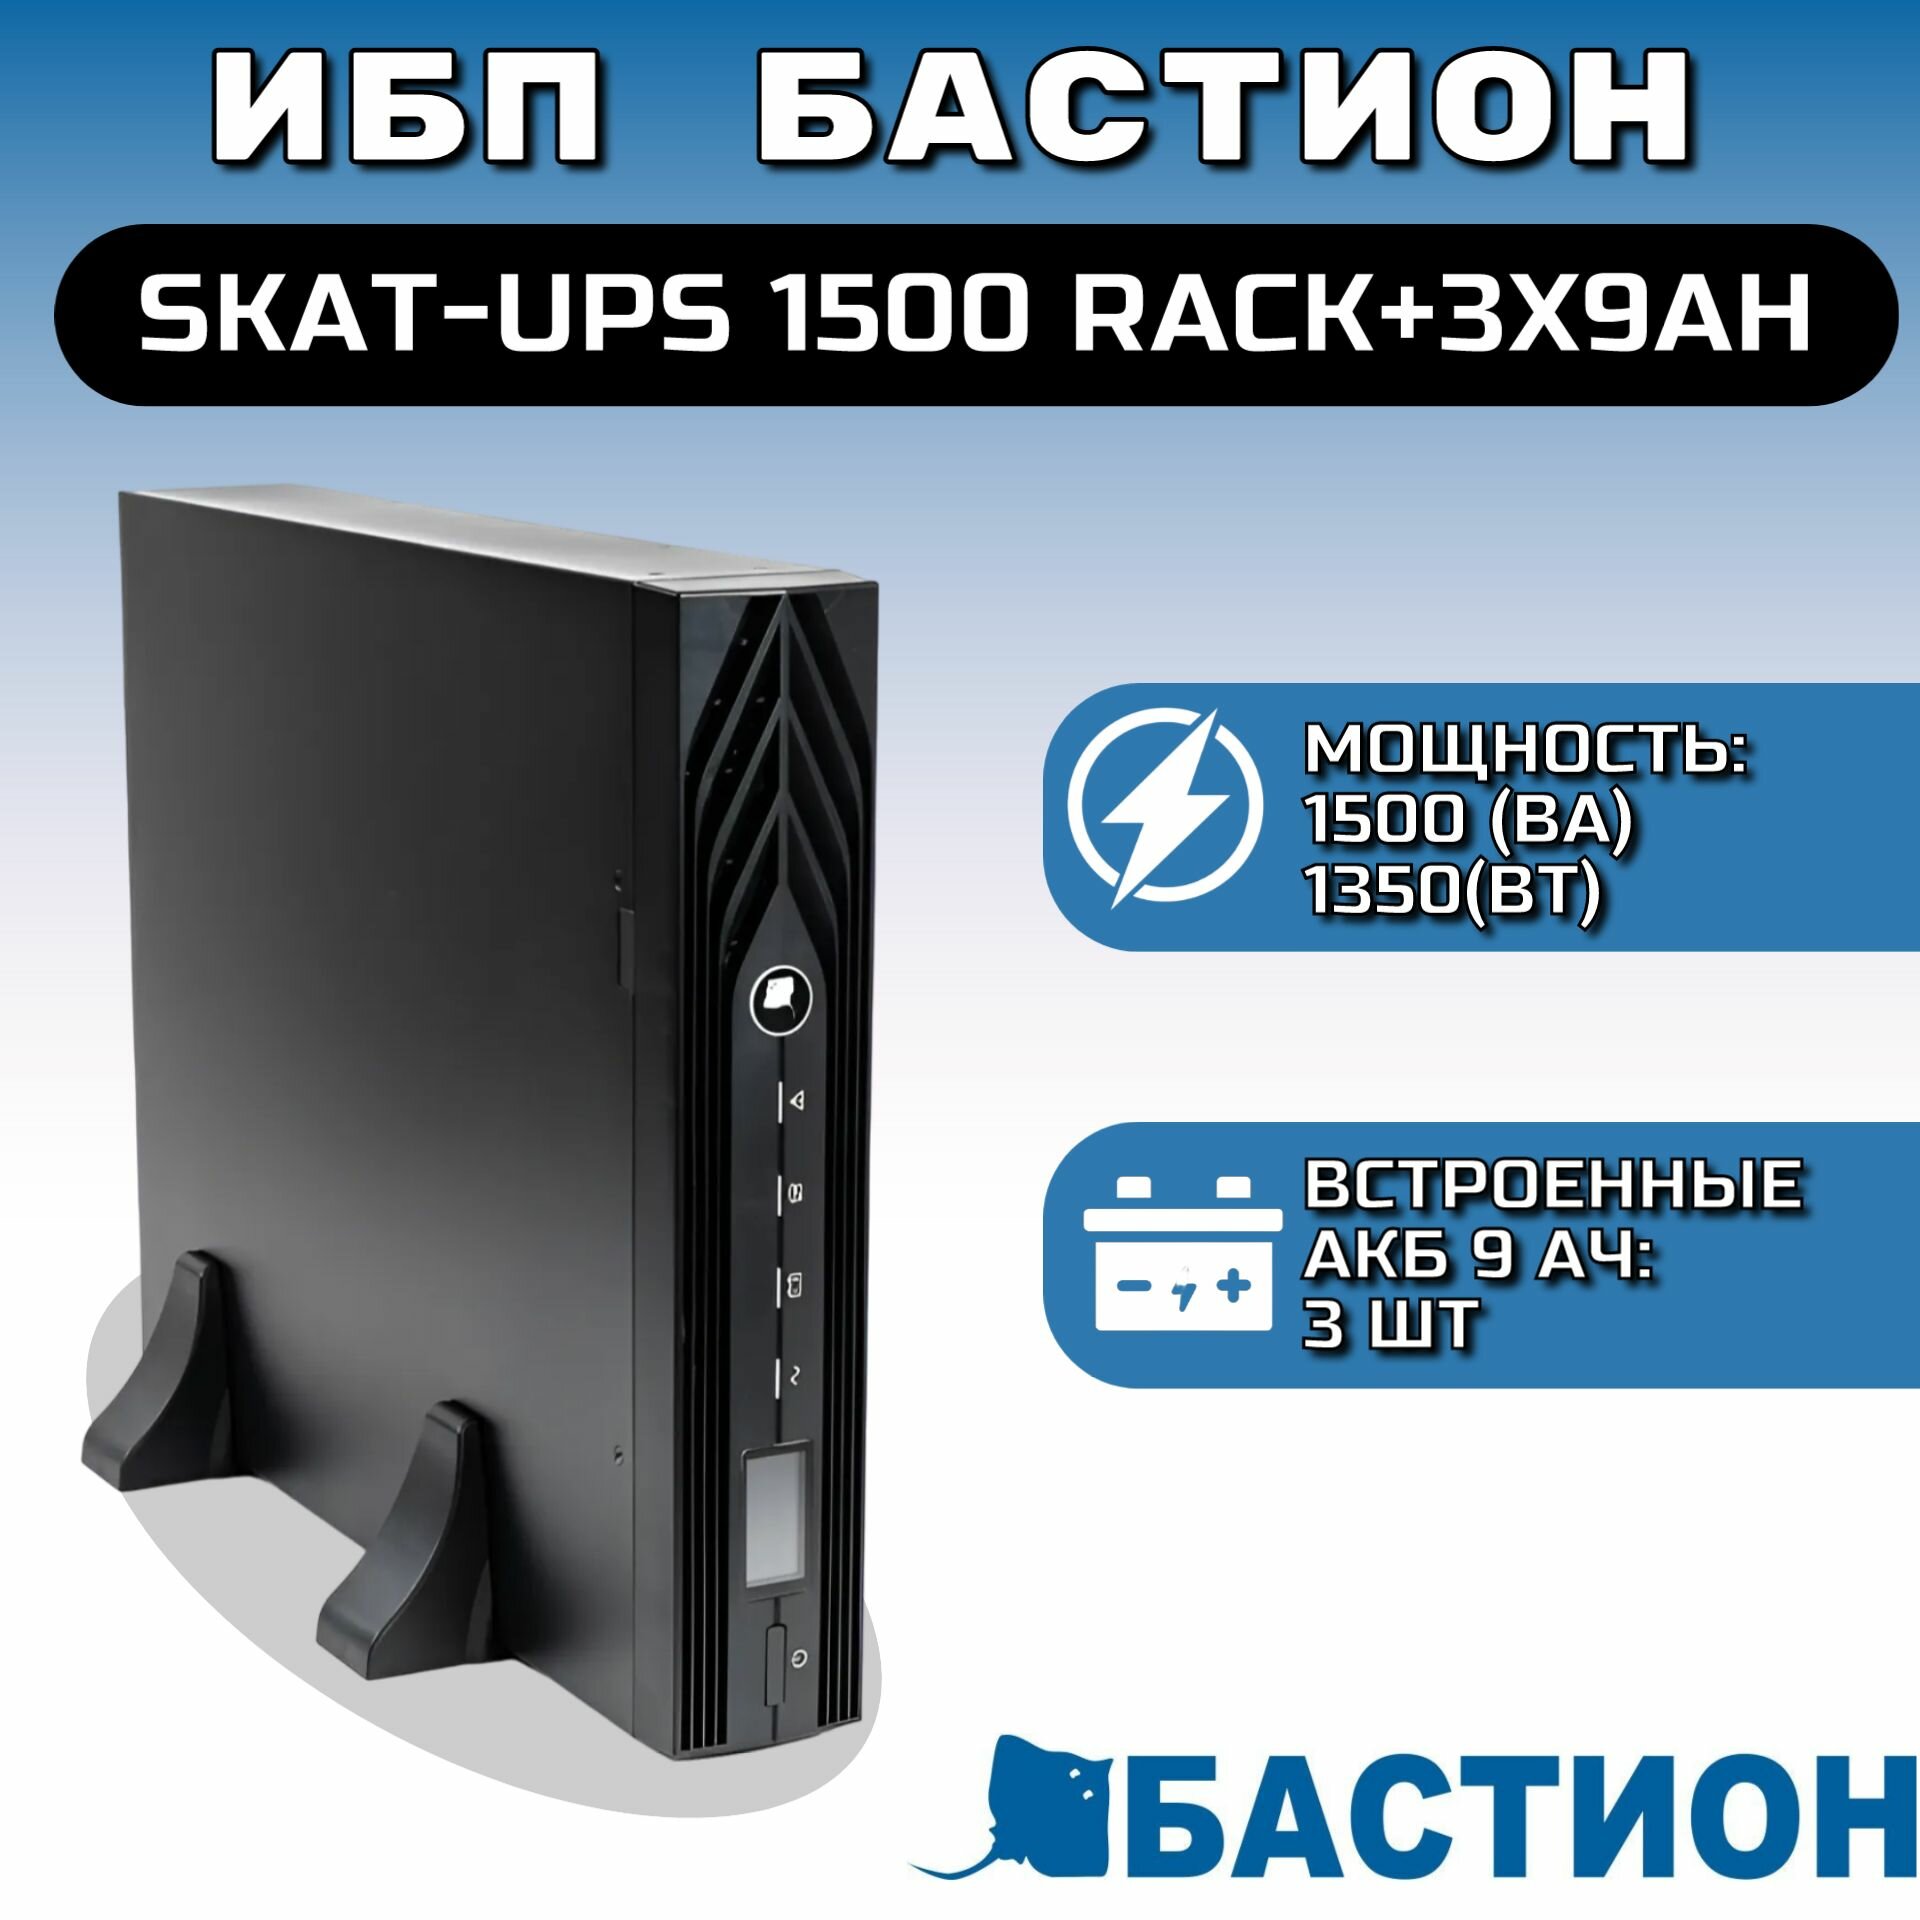 ИБП Бастион SKAT-UPS 1500 RACK+3X9AH (488)